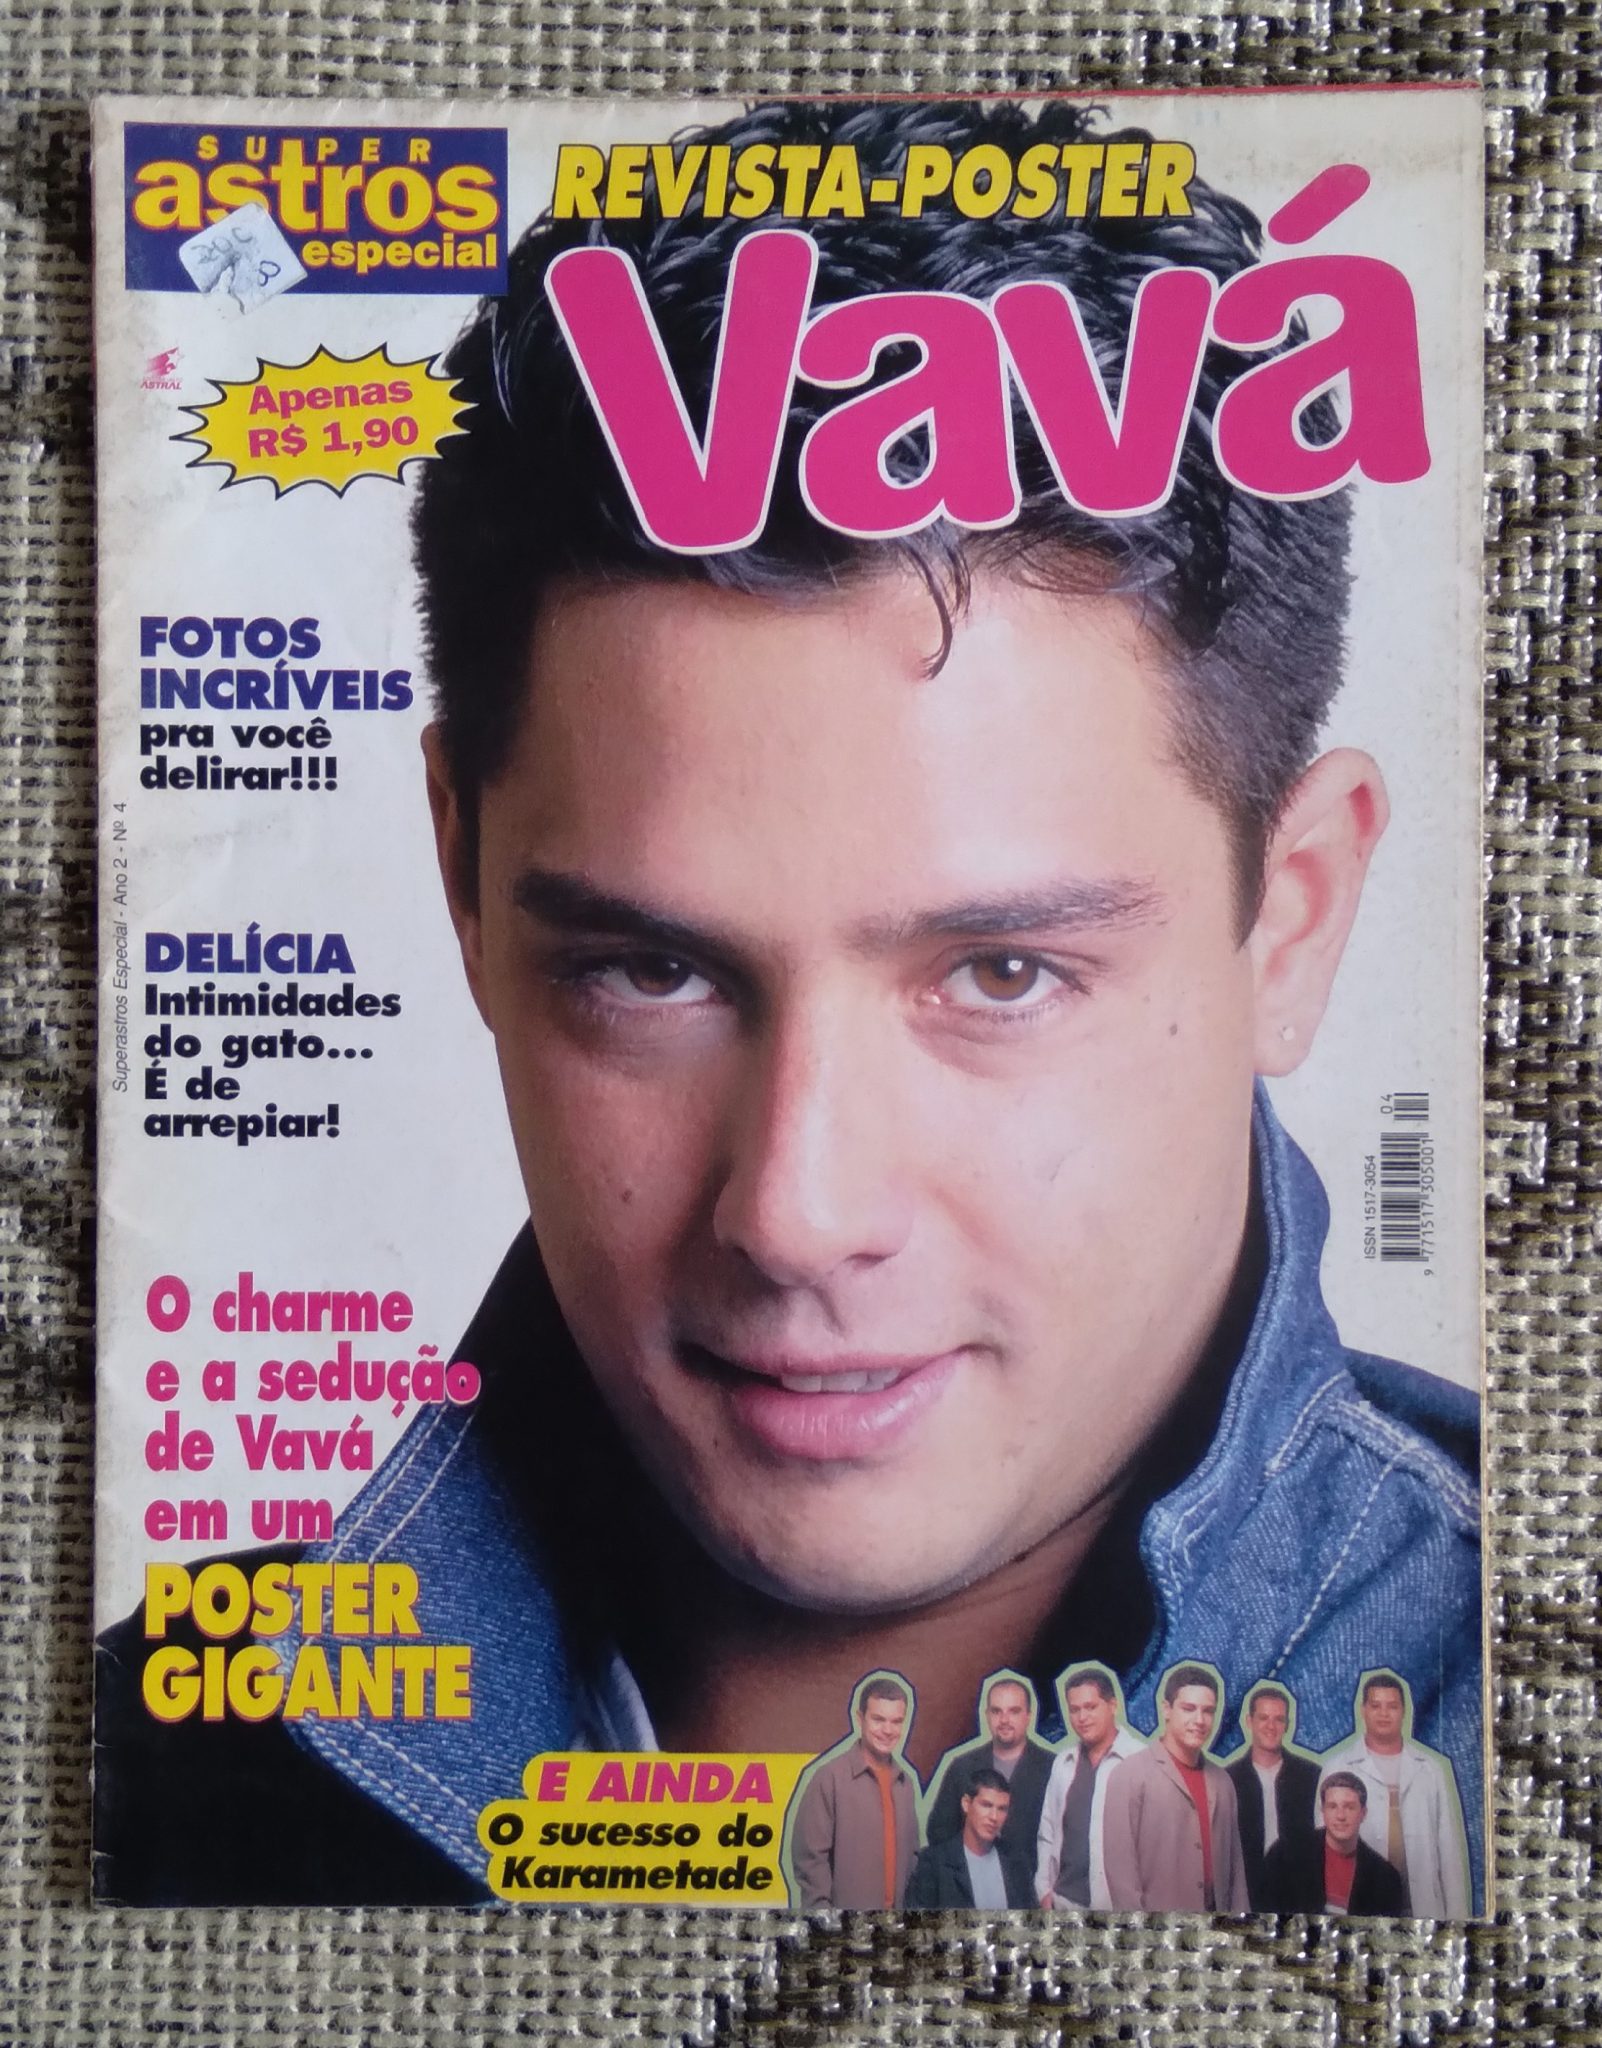 revista the beatles general especial brasil 80s - Comprar Revistas antigas  de música, manuais e cursos no todocoleccion